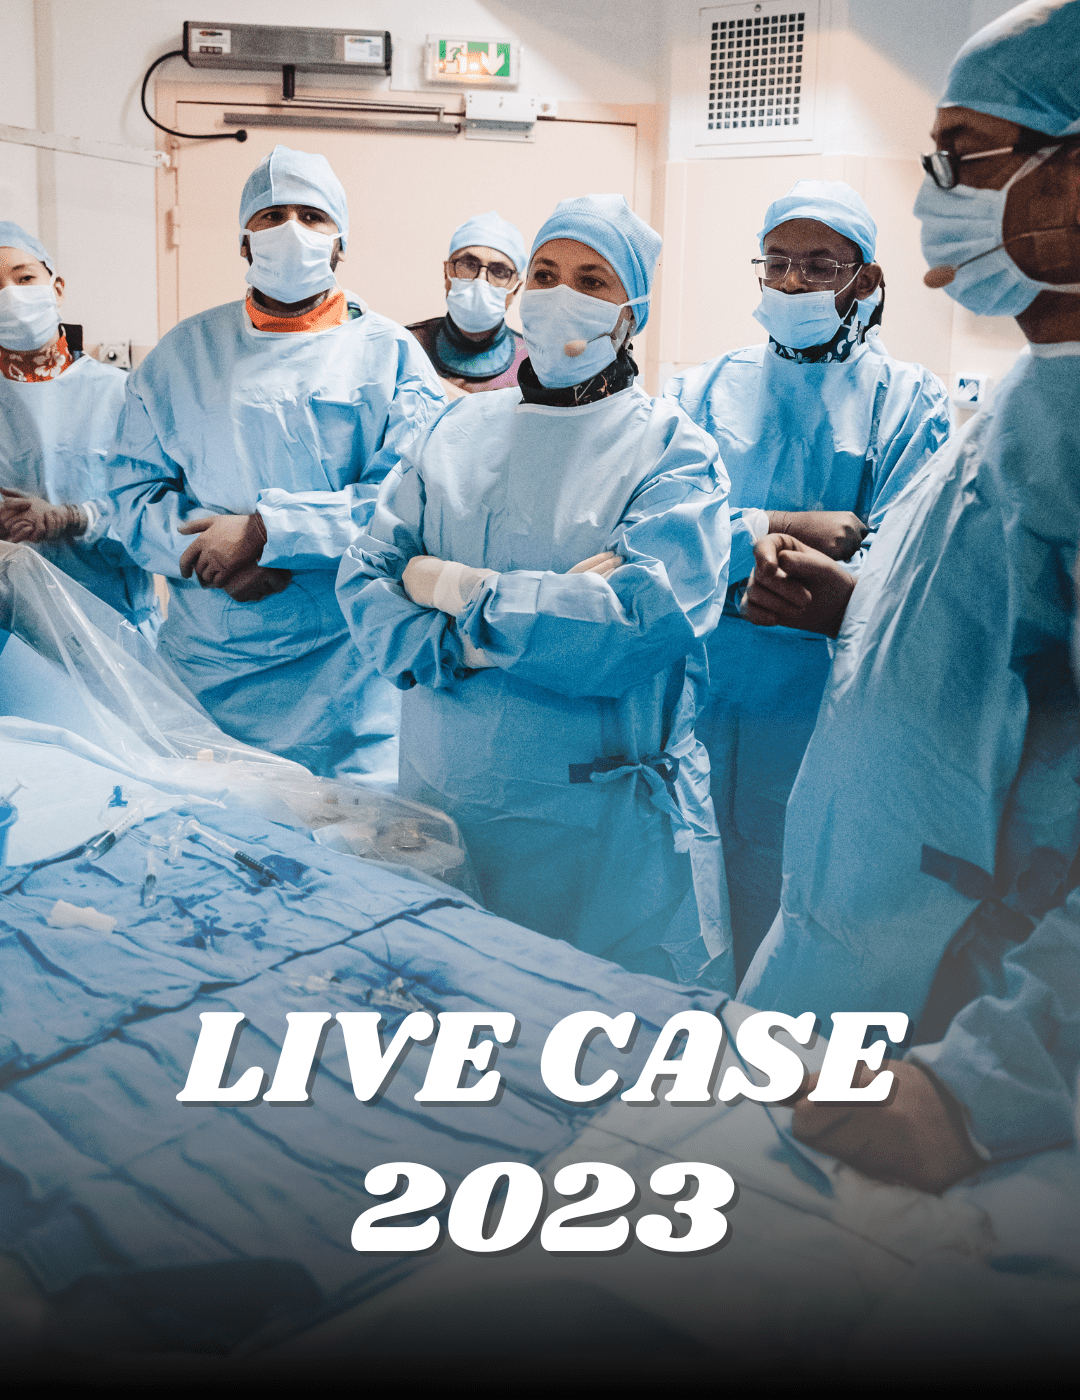 Live case 2023